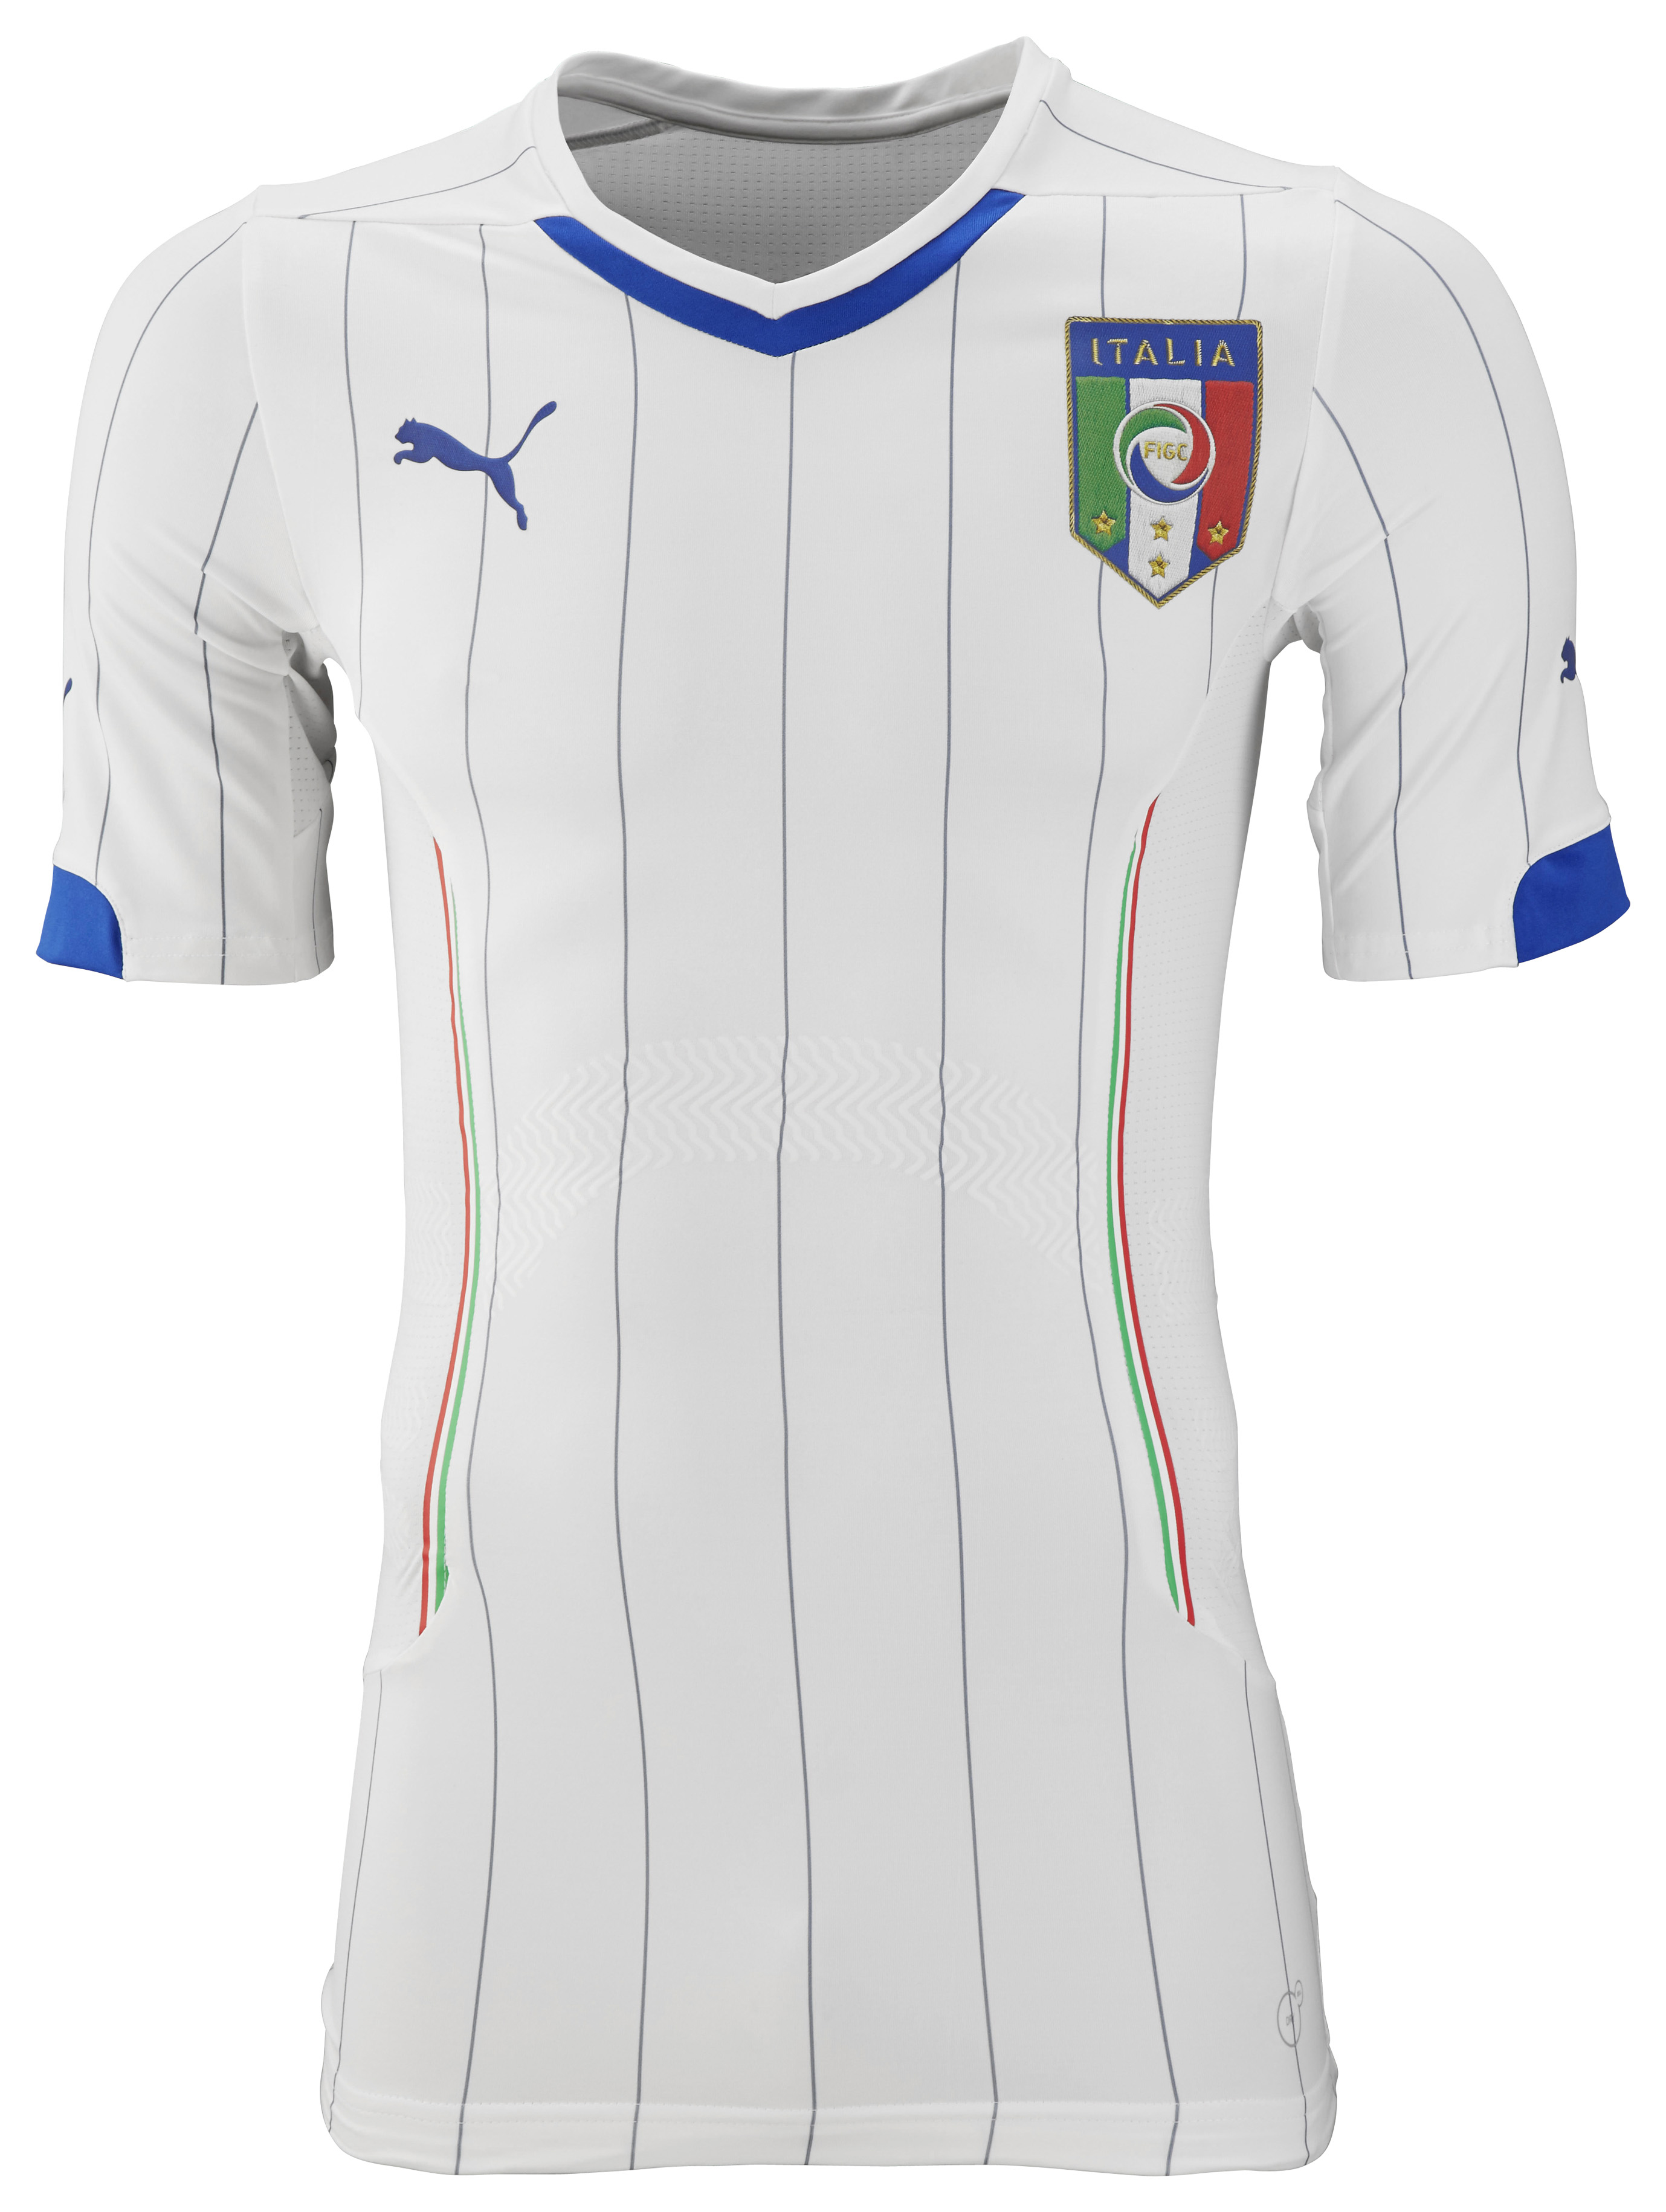 SS14 Italy Away FIGC Promo ACTV Slim Away_701816_02